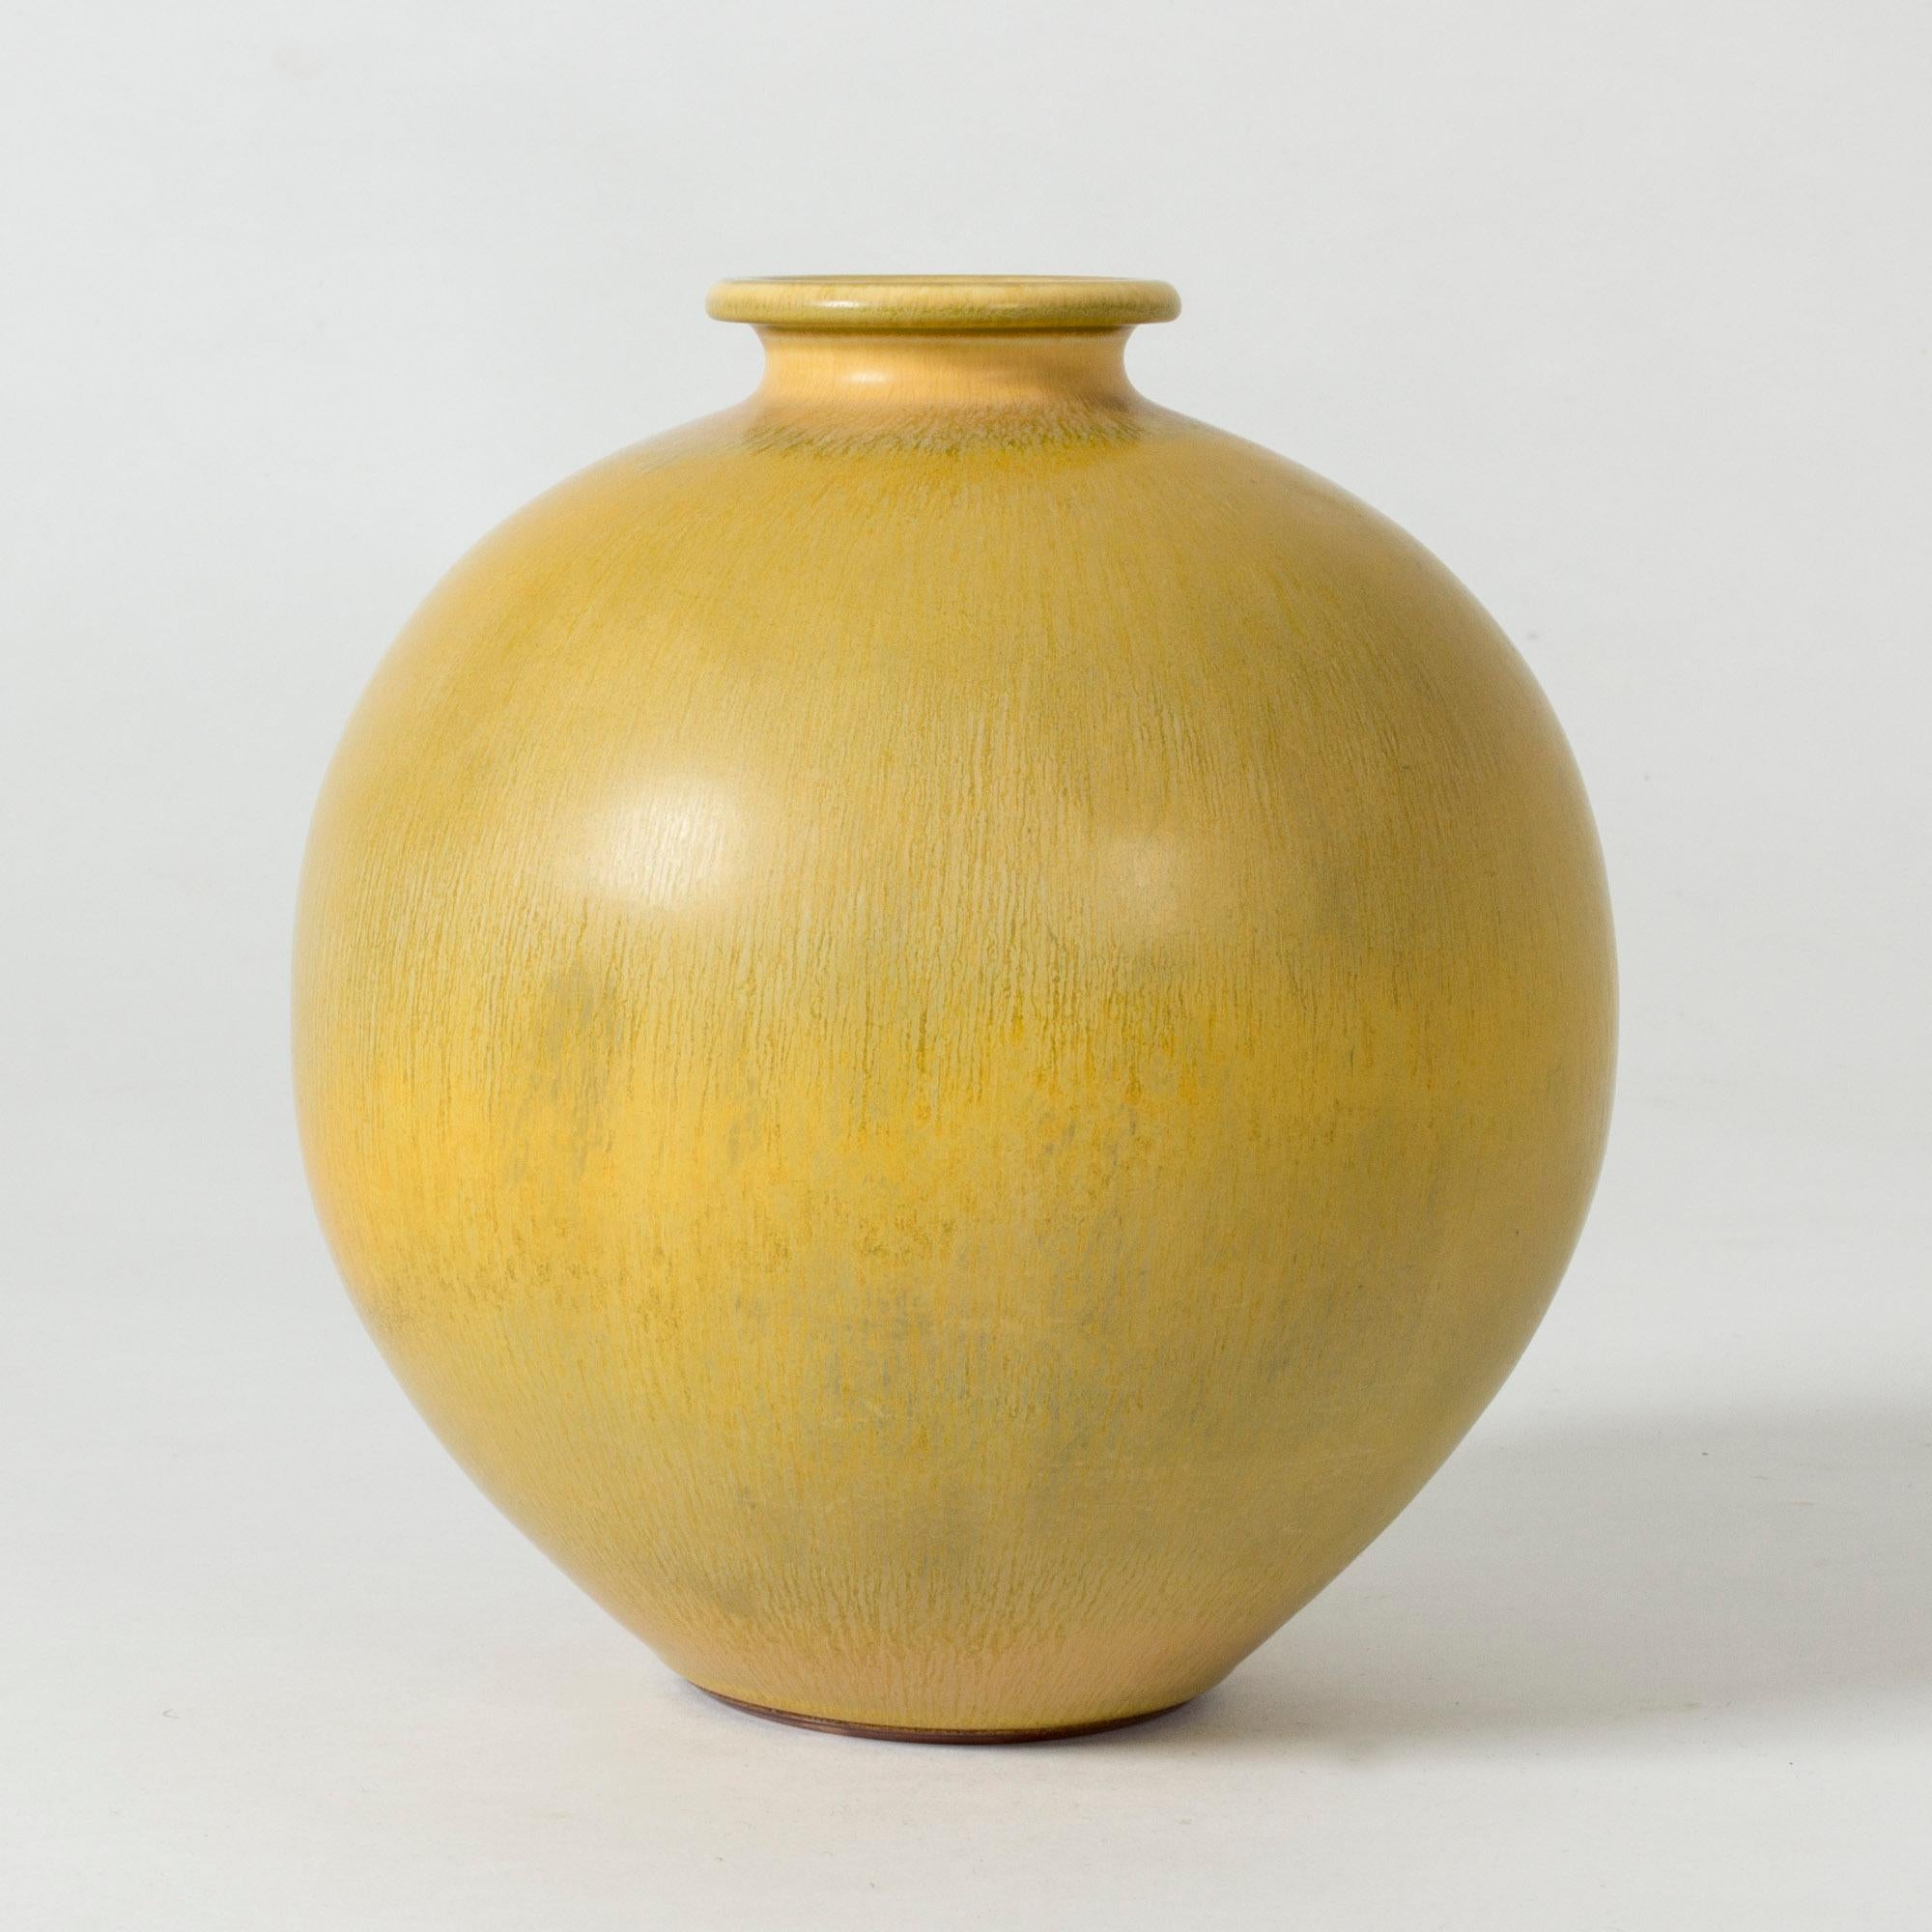 Beautiful round stoneware vase by Berndt Friberg, glazed with hare’s fur glaze. Striking yellow color.